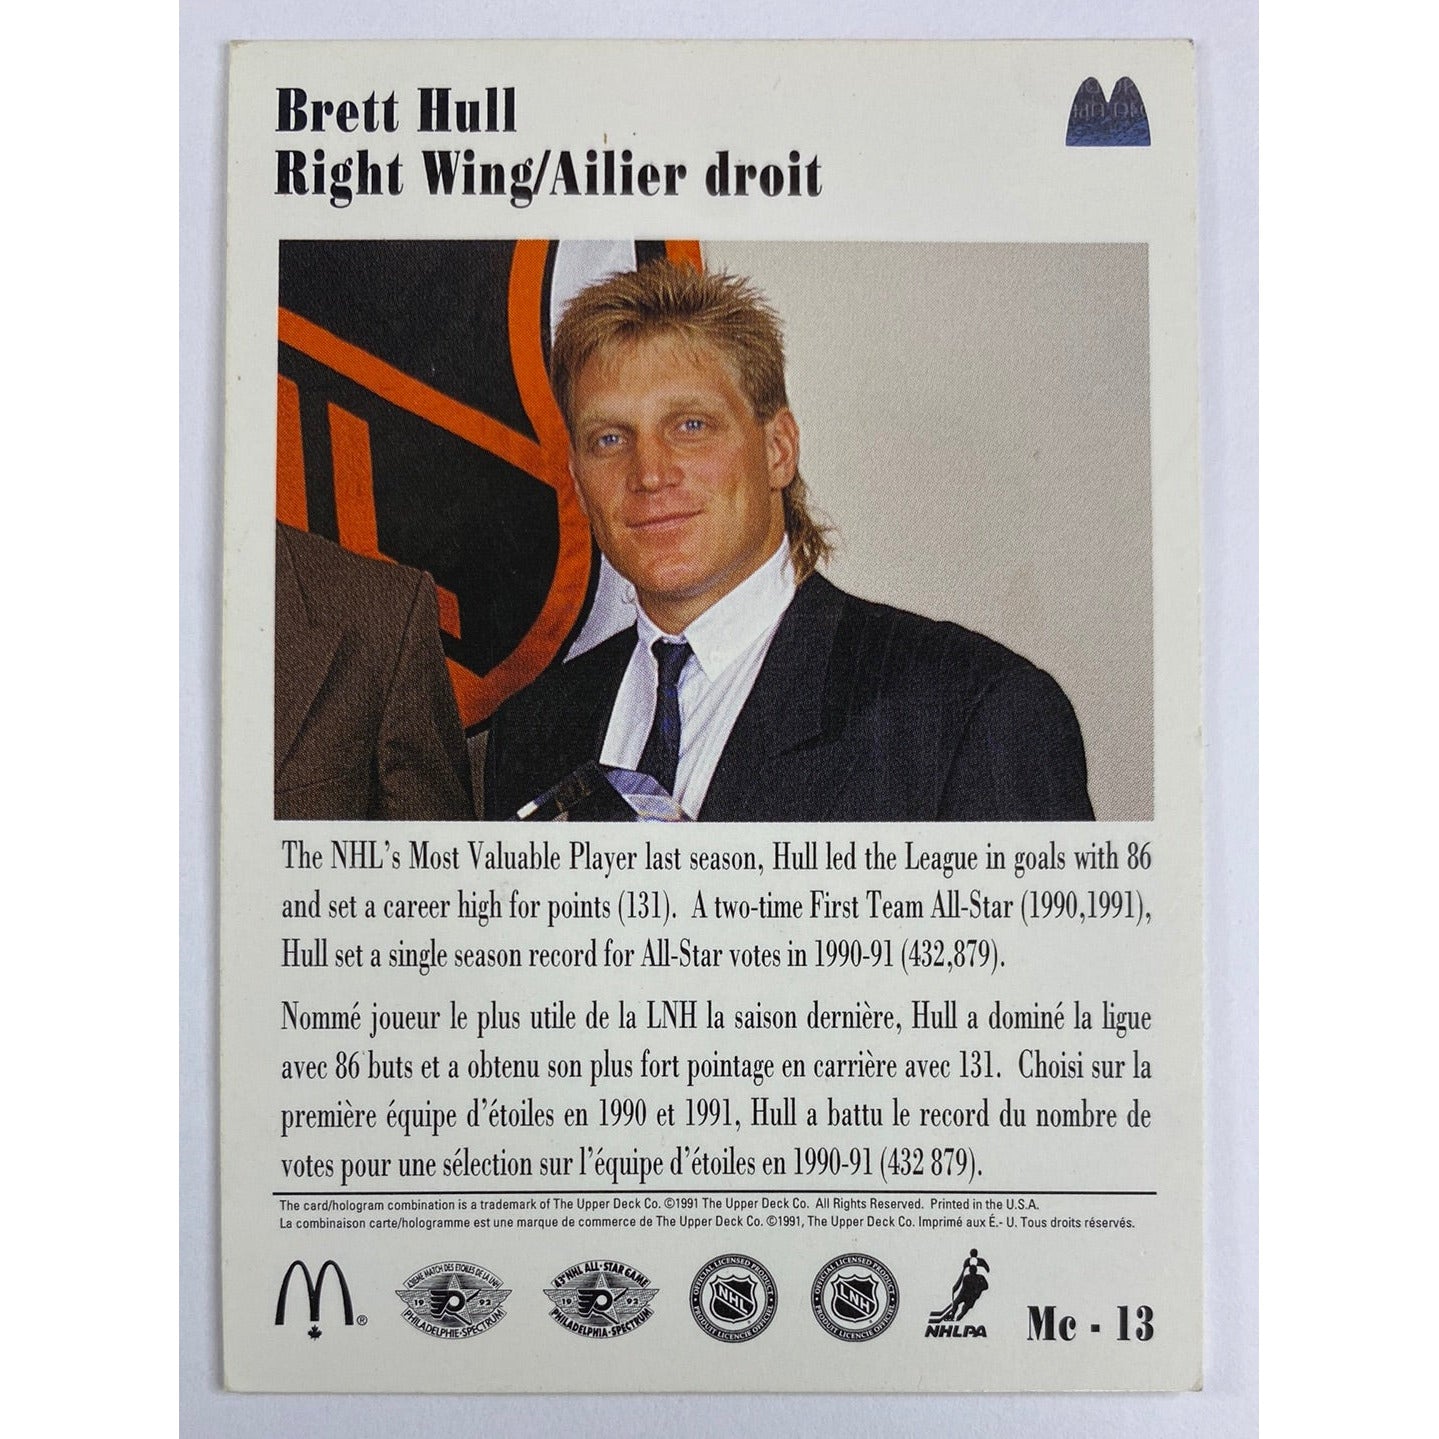 1991-92 Upper Deck McDonald’s Brett Hull “In Person” Auto